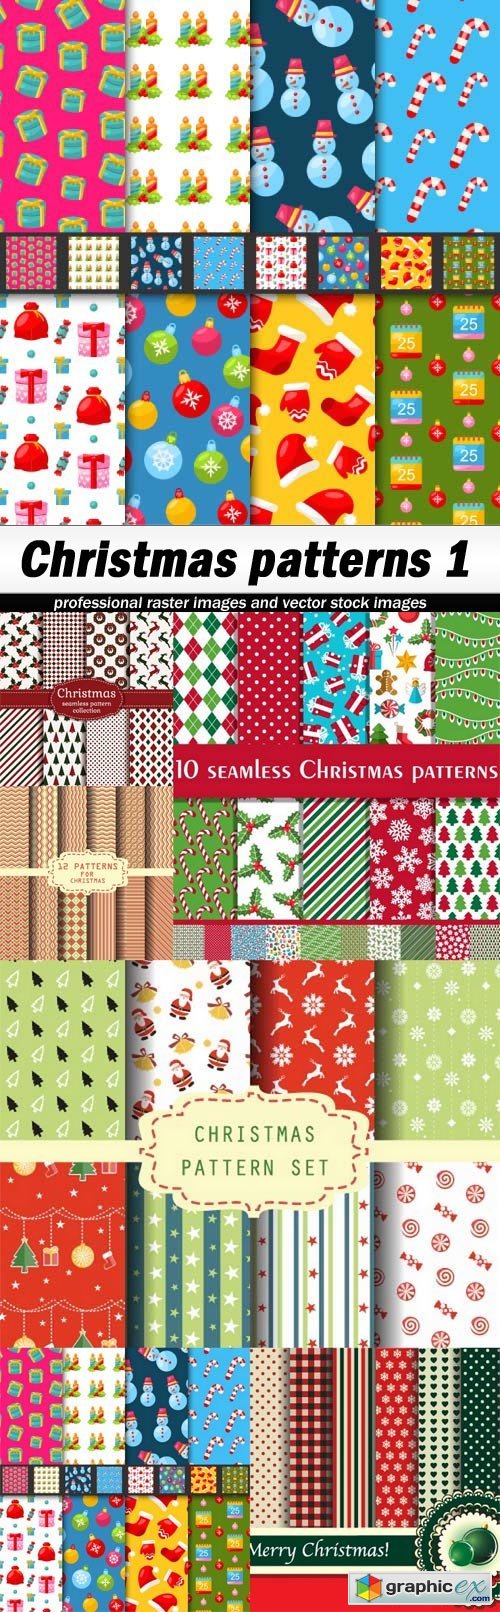 Christmas patterns 1